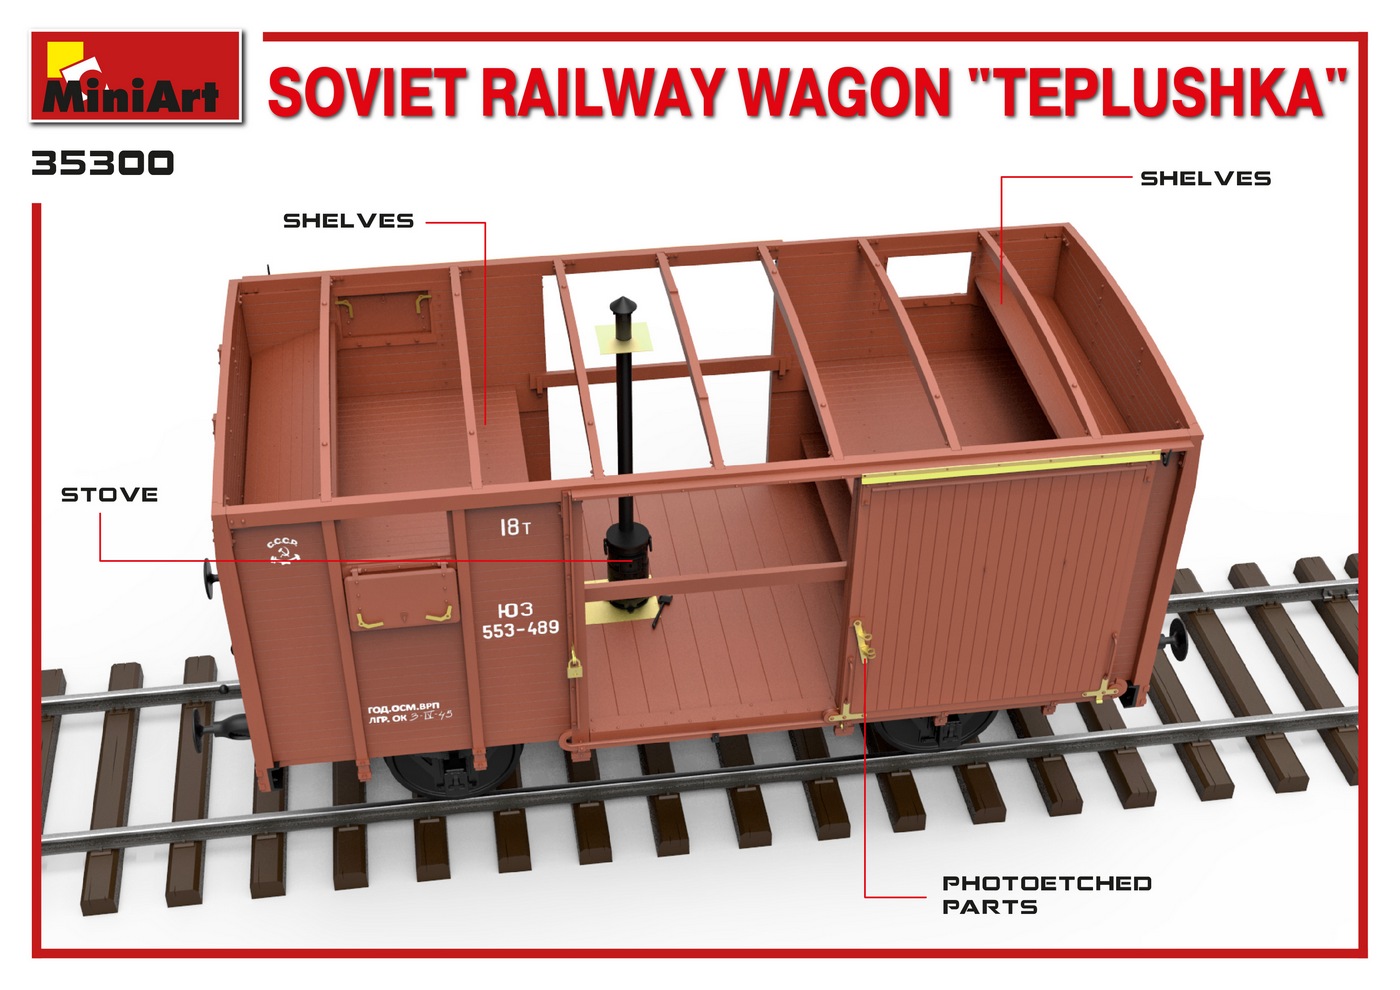 1/35 SOVIET RAILWAY WAGON “TEPLUSHKA” 35300